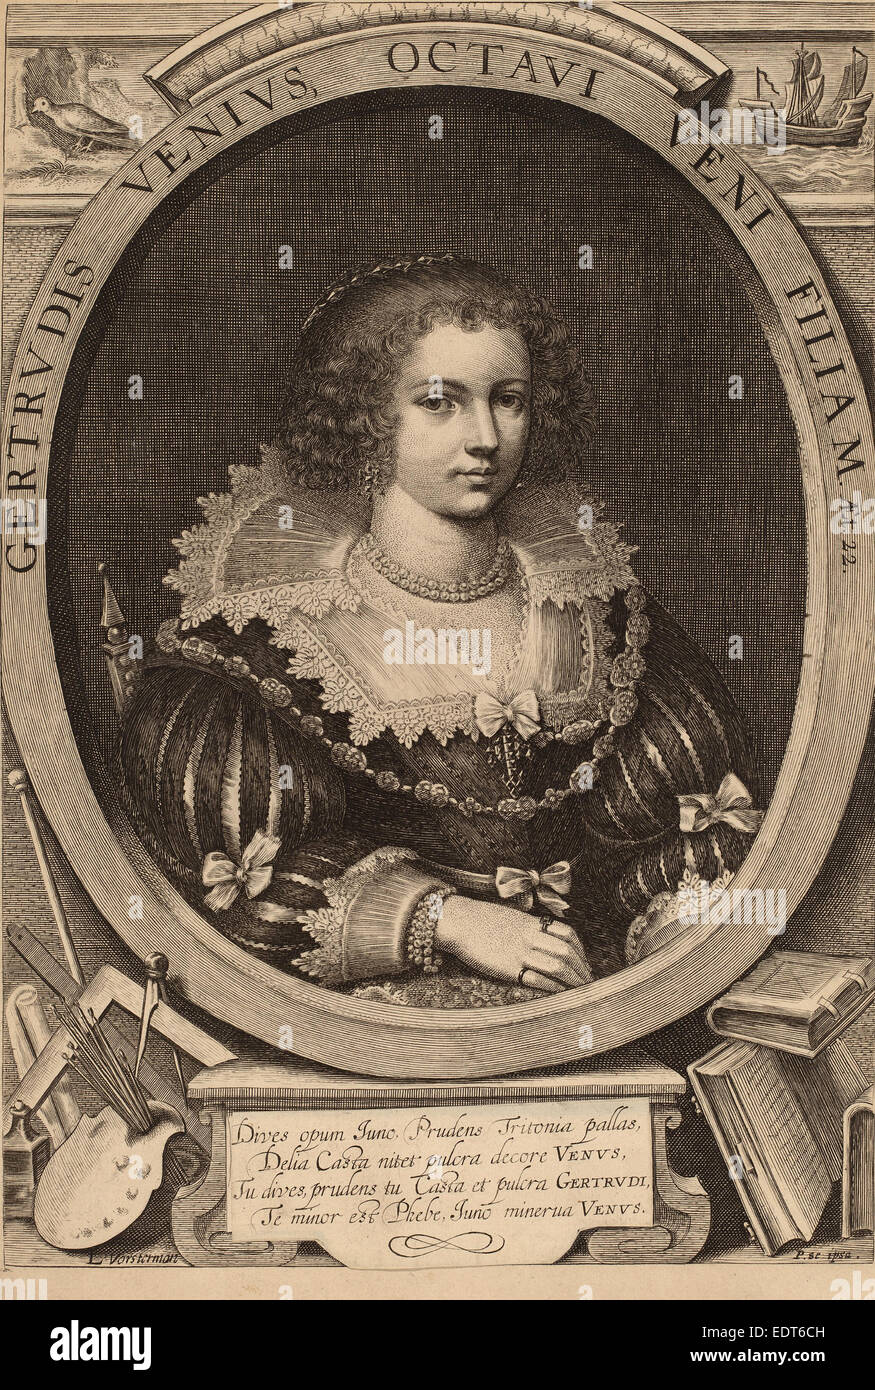 Emil Lucas Vorsterman (fiammingo, 1595 - 1675), Gertrude van Veen, incisioni su carta vergata Foto Stock